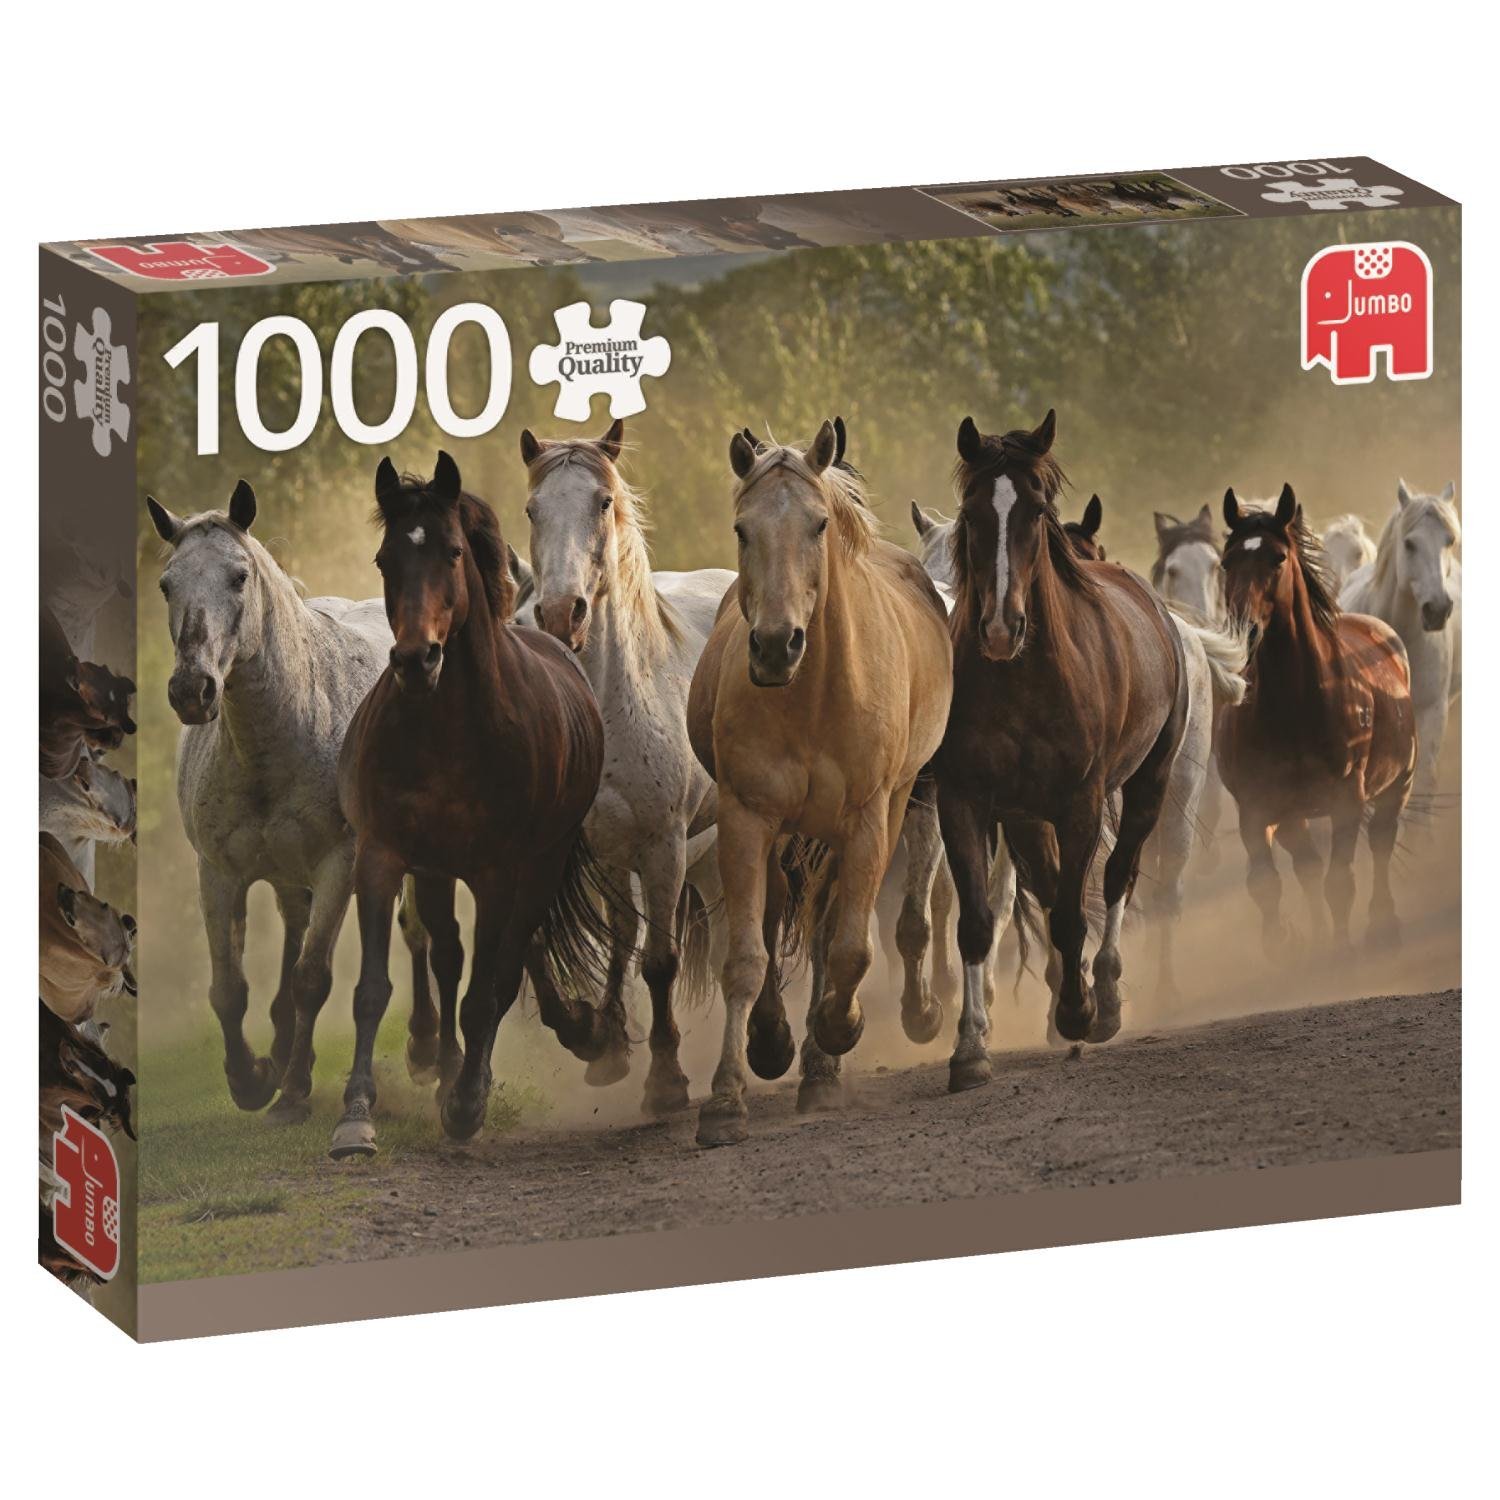  Horses 1000 piece jigsaw puzzle